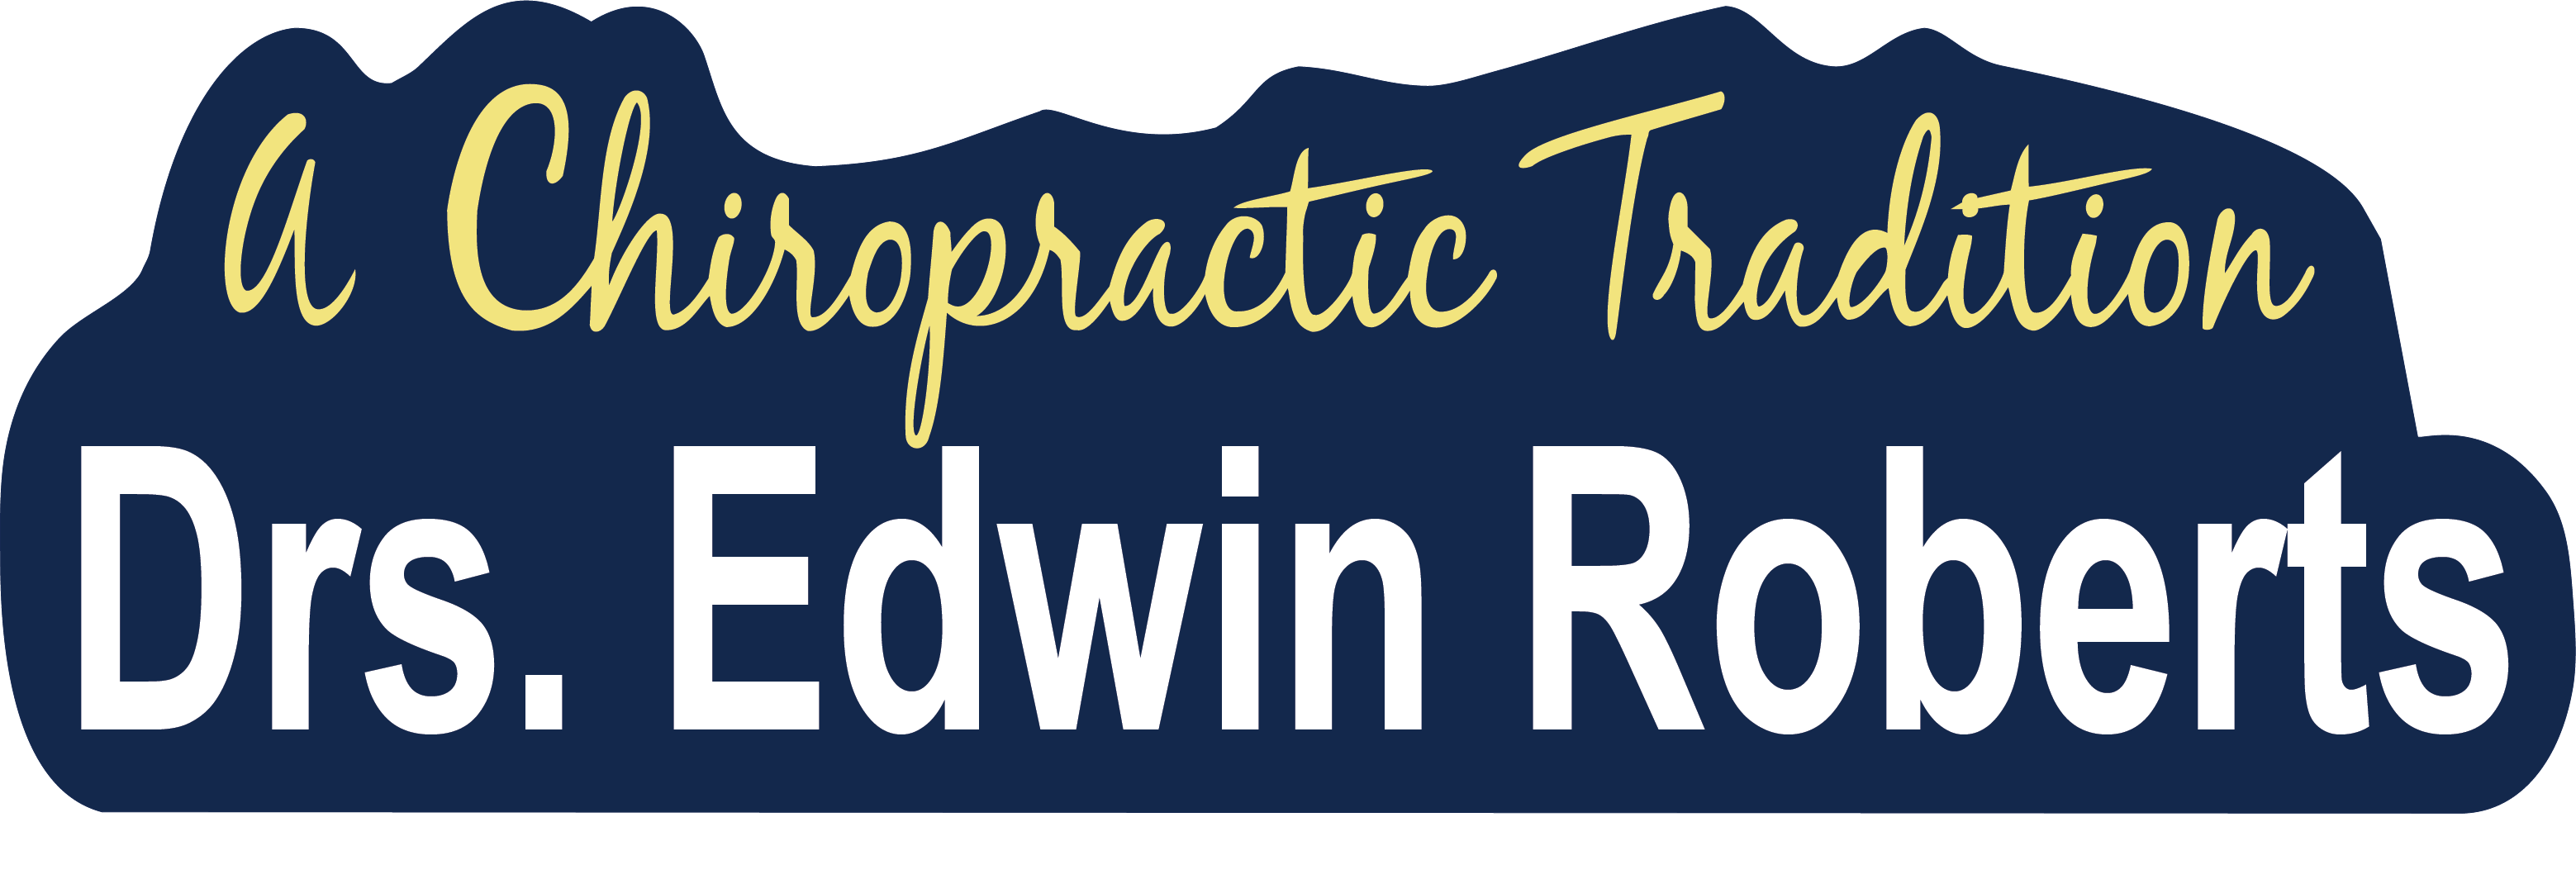 Edwin Roberts Chiropractic